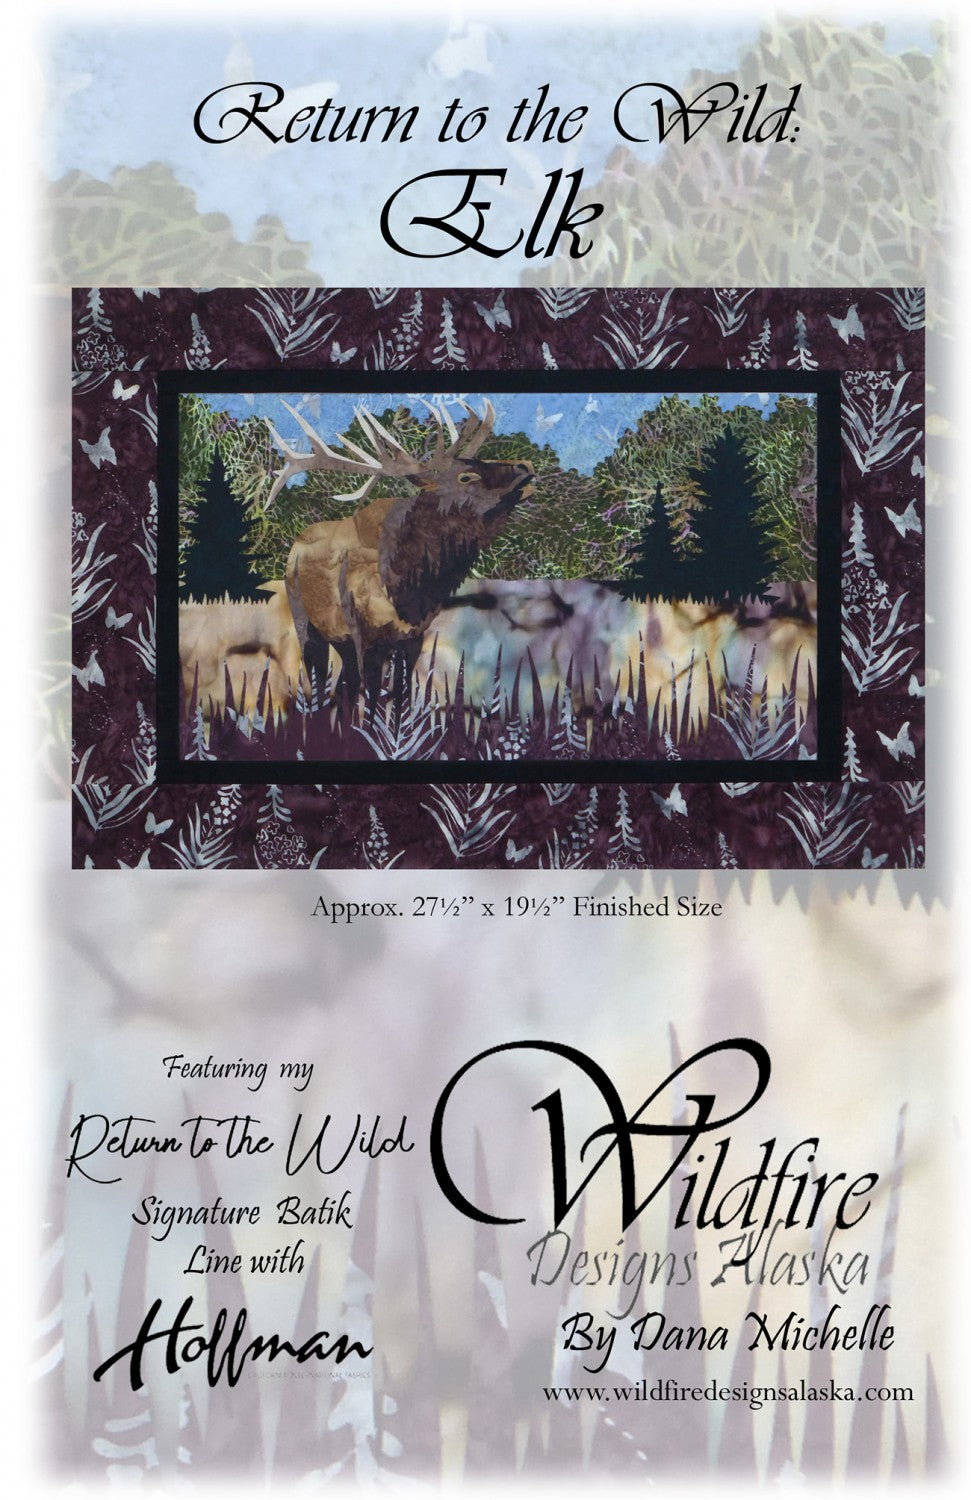 Wildfire Designs Alaska Return to the Wild Elk Laser Cut Applique Kit Front Cover